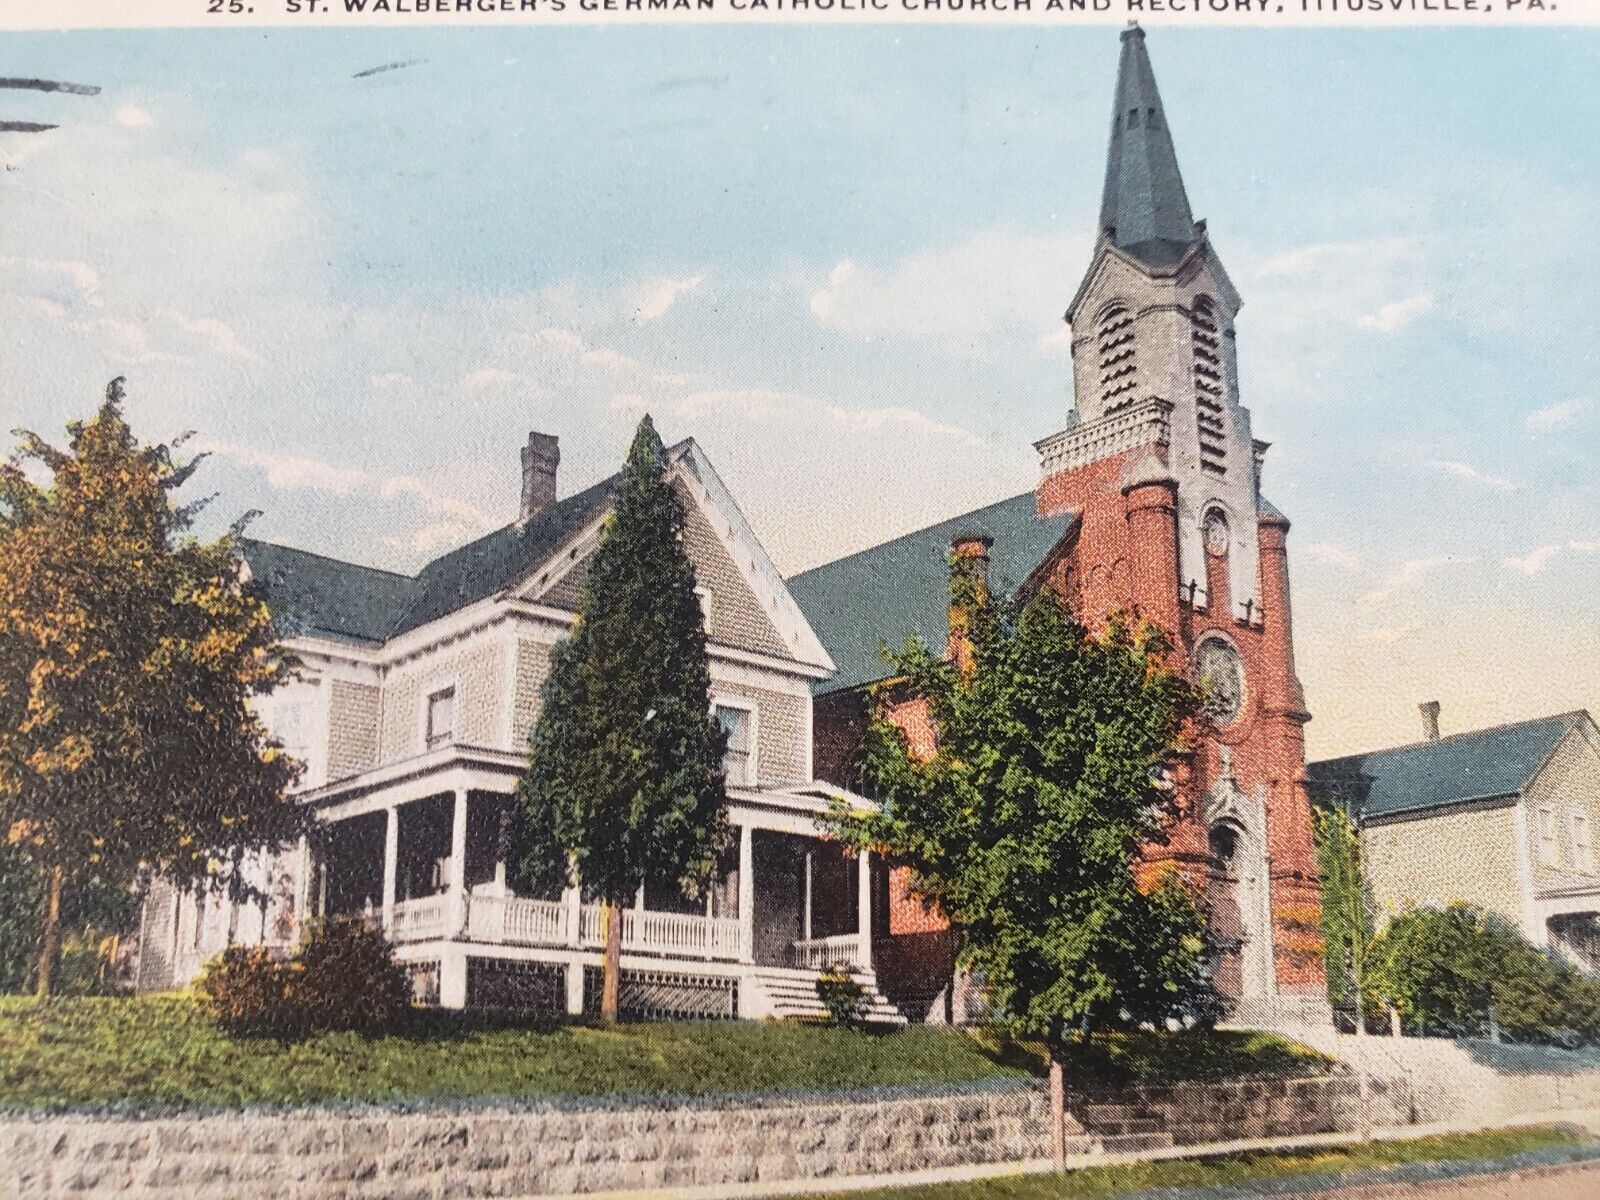 C 1929 St Walbergers German Catholic Church & Rectory Titusville PA Postcard